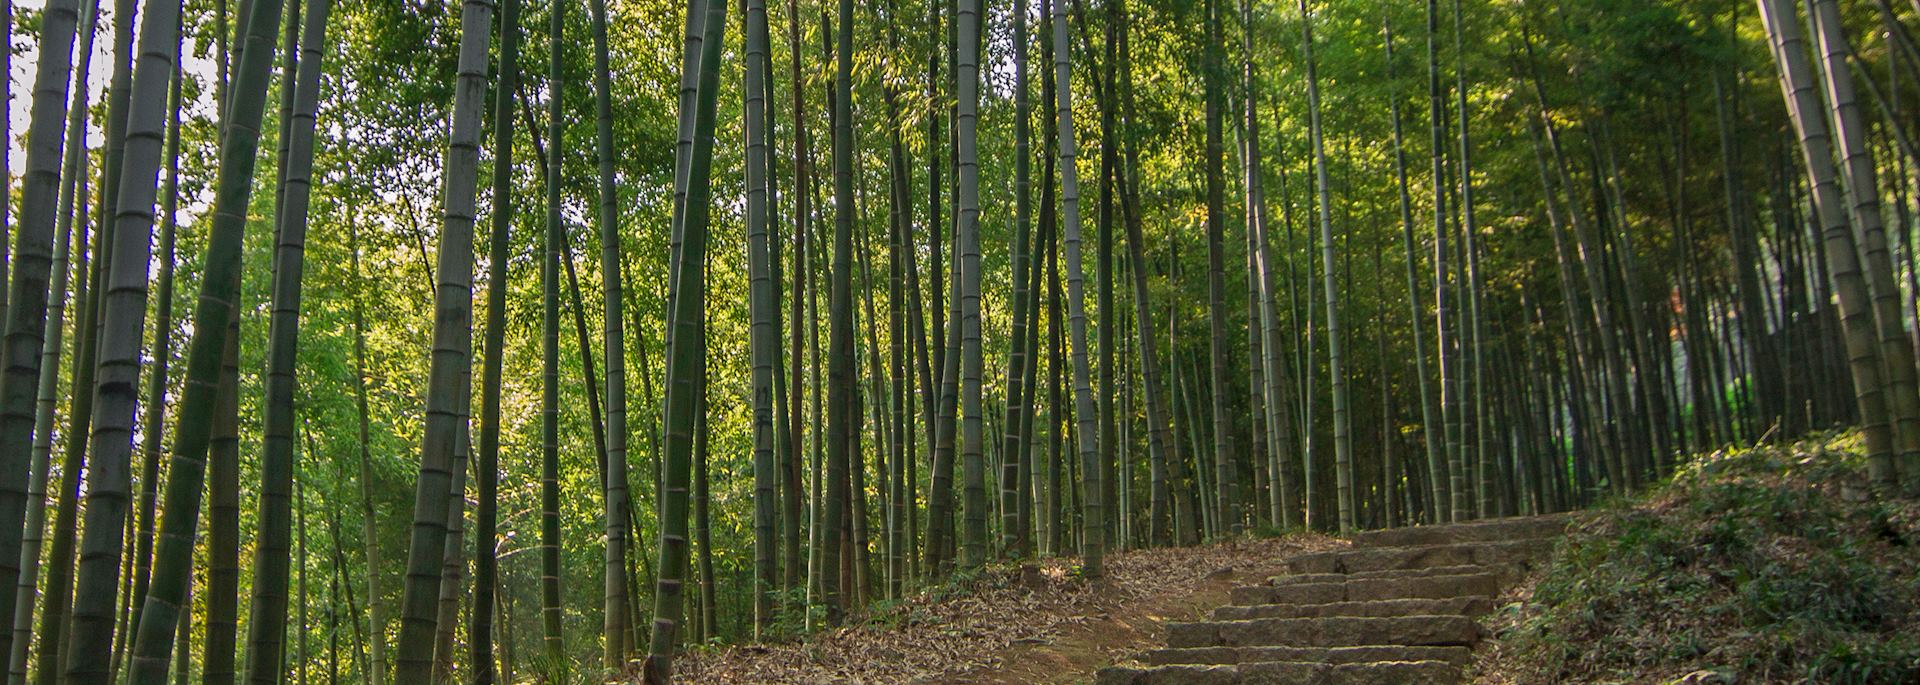 Bamboo forest, Moganshan